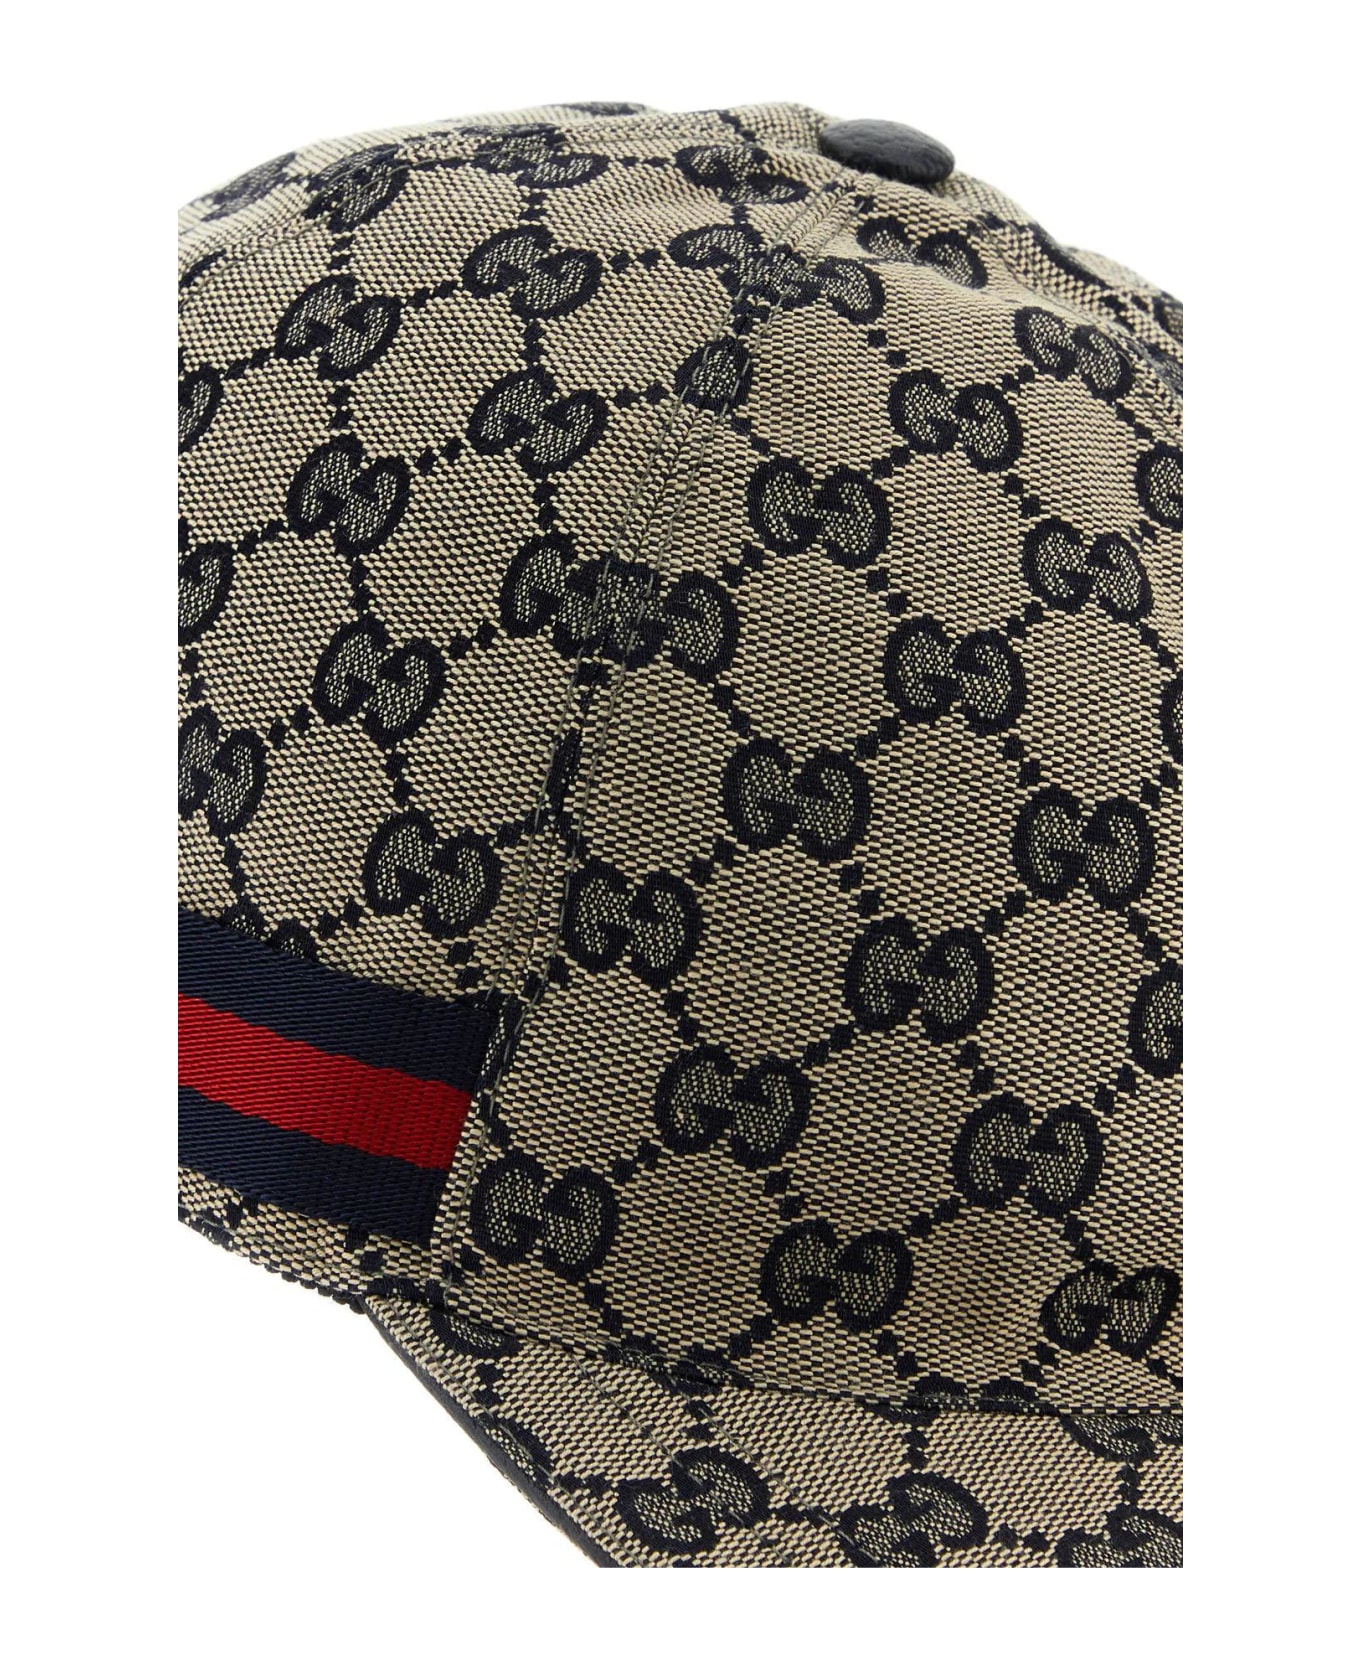 Gucci Gg Supreme Fabric Baseball Cap - Beige